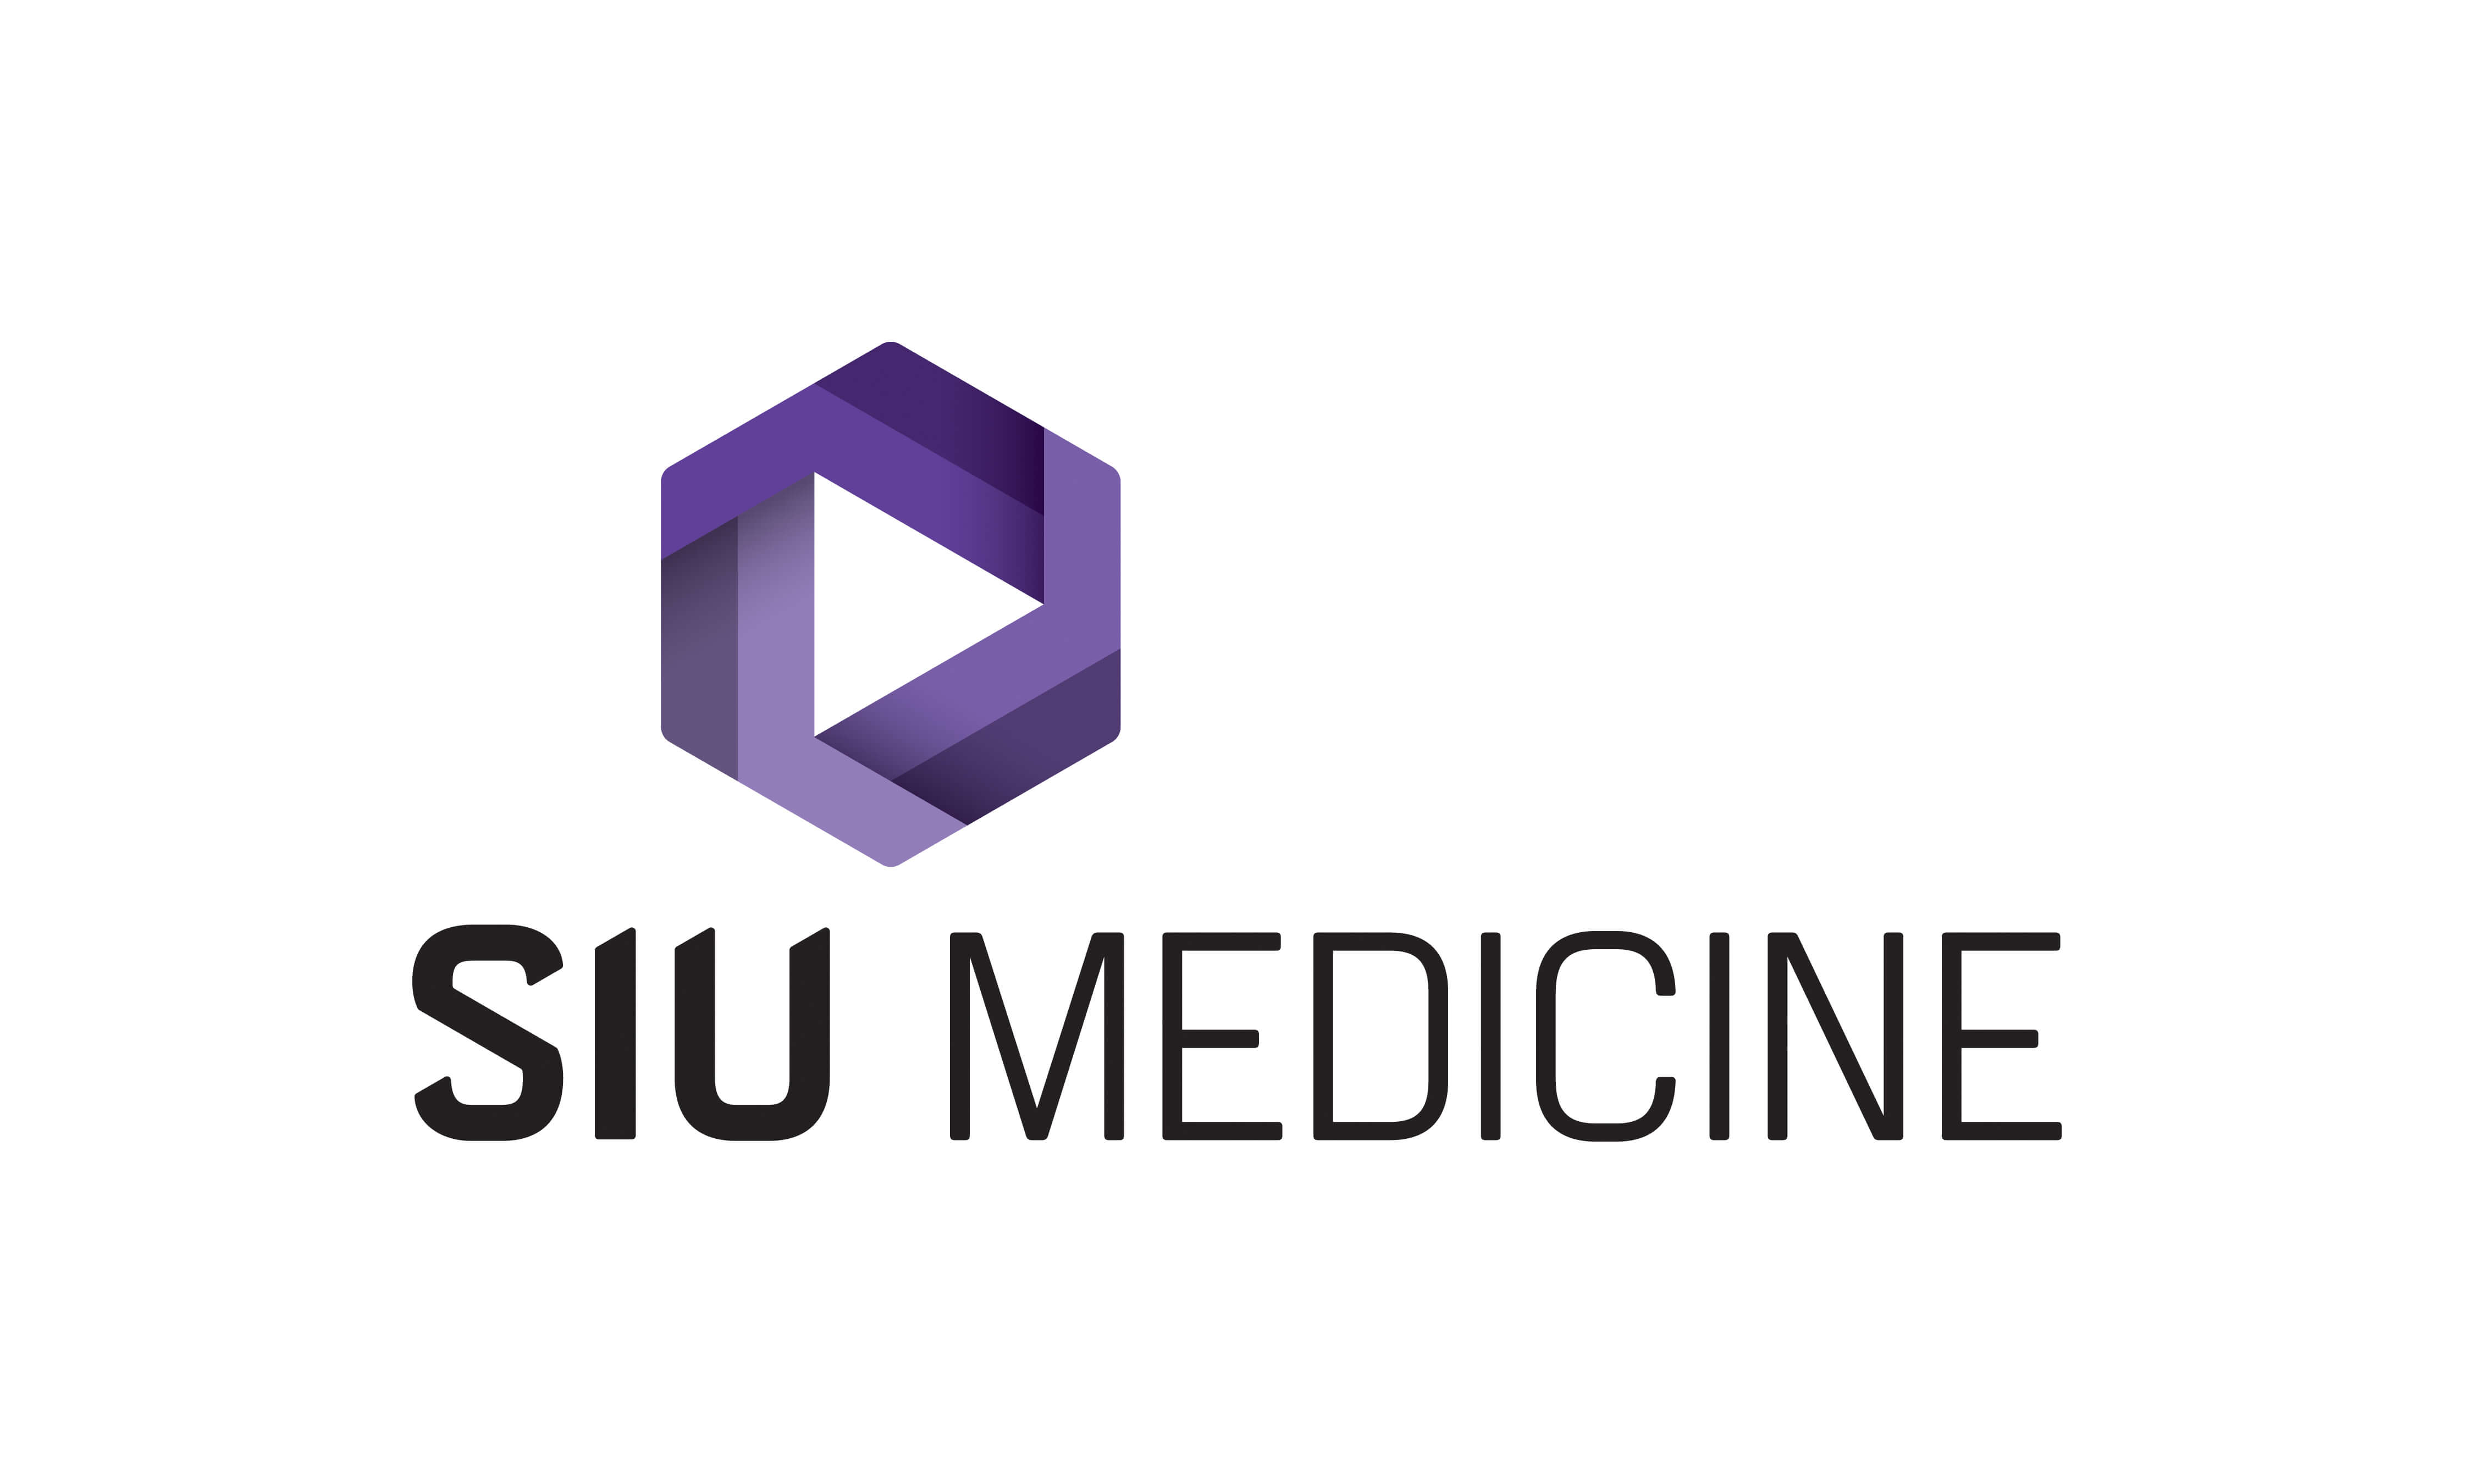 SIU Medicine logo